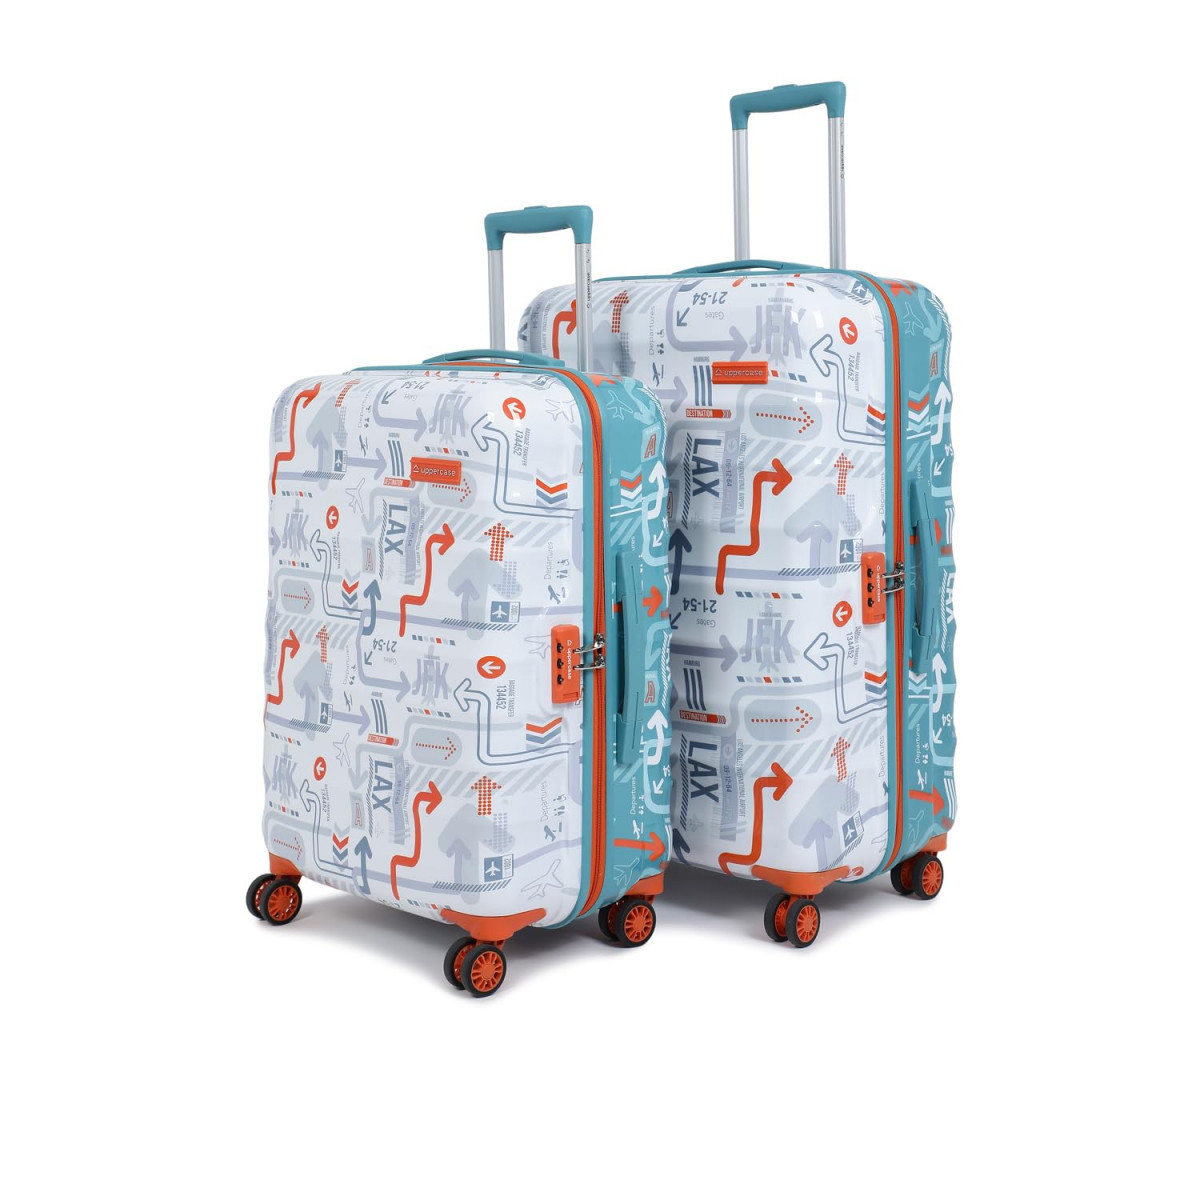 uppercase Jfk Trolley Bag Set Of 2 SM Hardsided Polycarbonate Cabin  Check-In Trolley Bag Combination Lock 8 Wheel Suitcase 2000 Days Warranty Denim Blue 285 X 46 X 655 Cm Spinner